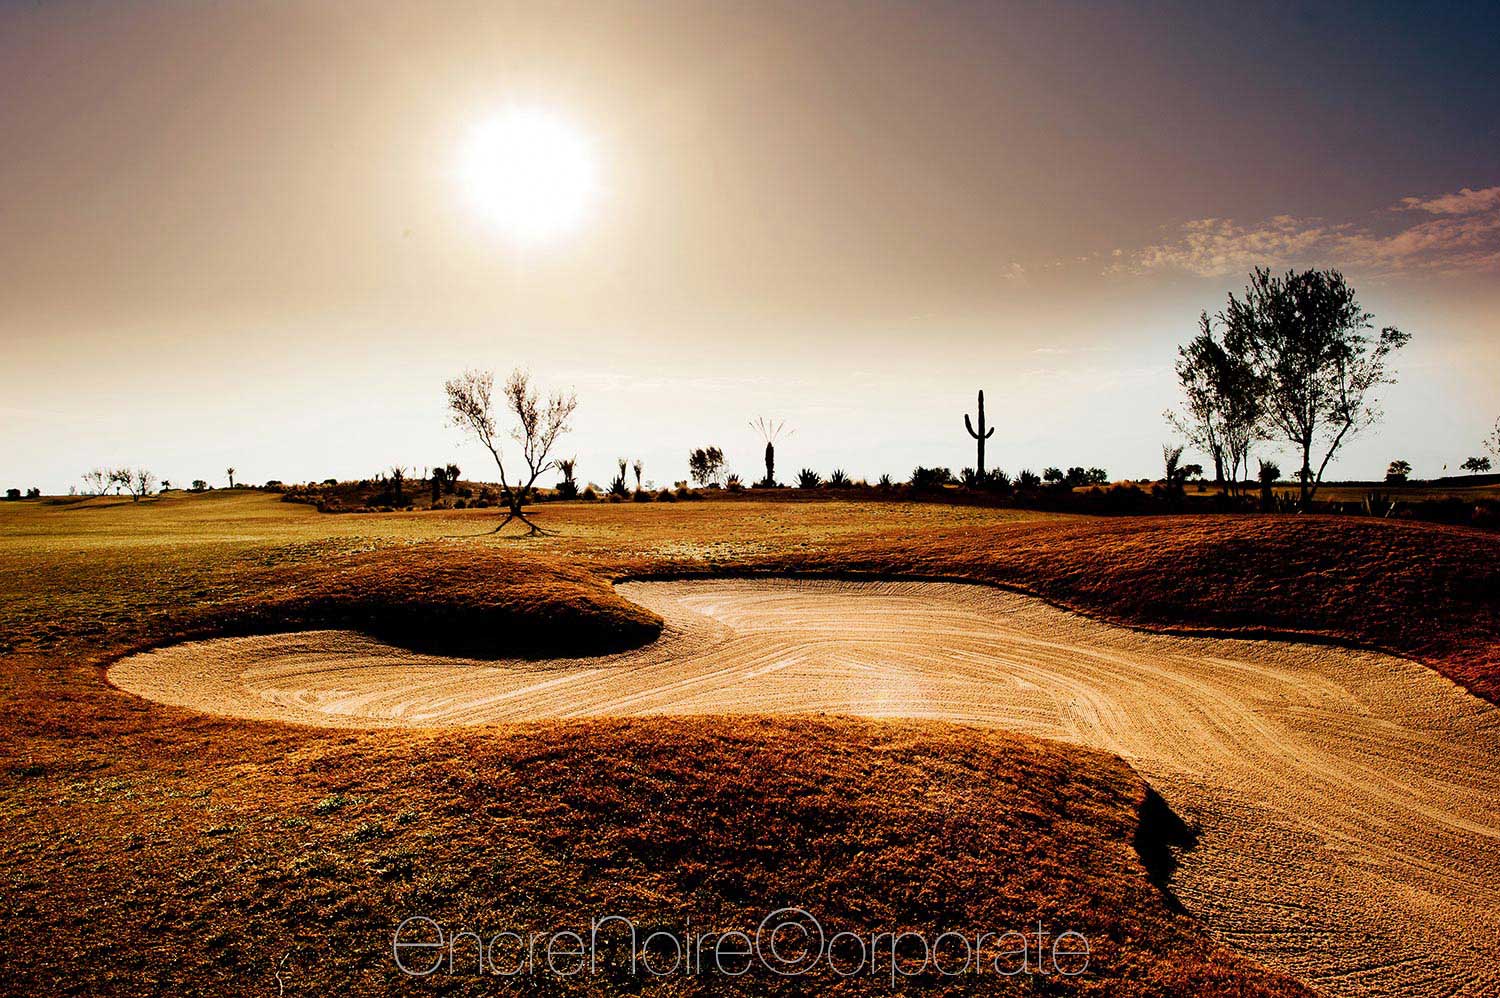 Photographe Golf 06